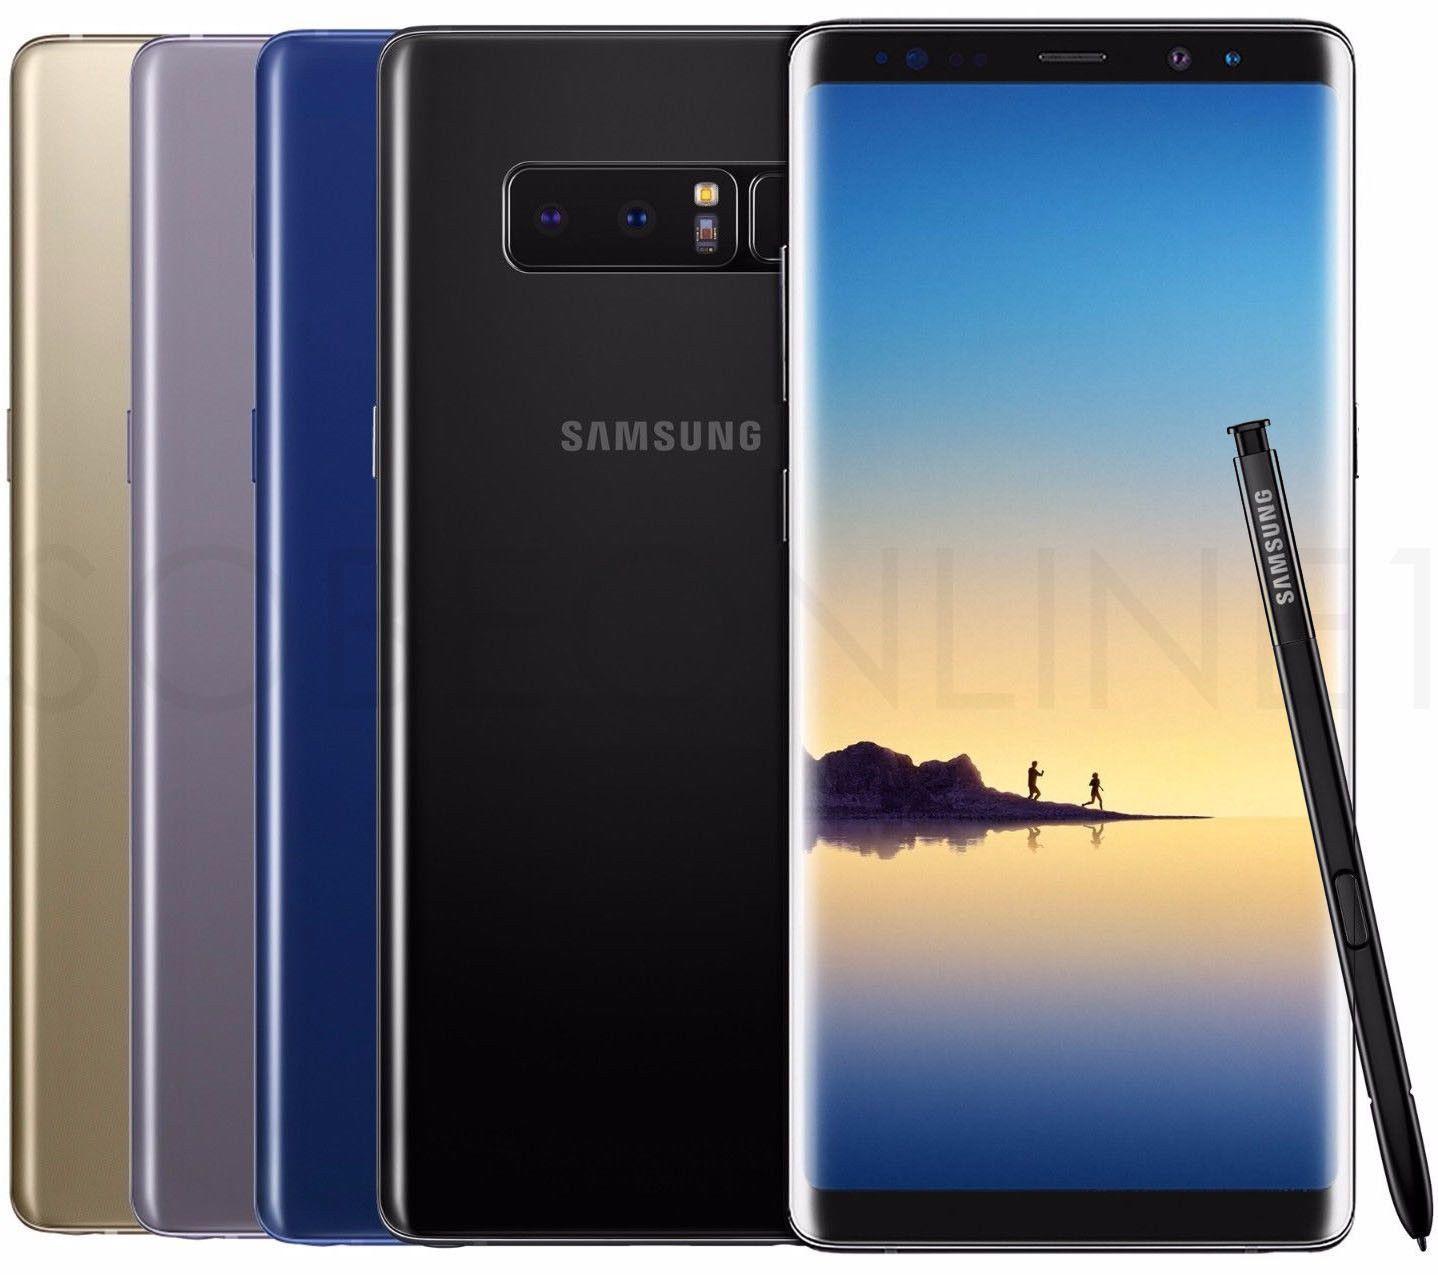 Samsung Galaxy Note 8 SM-N950F/DS 64GB (FACTORY UNLOCKED) Black Gold Gray Pink